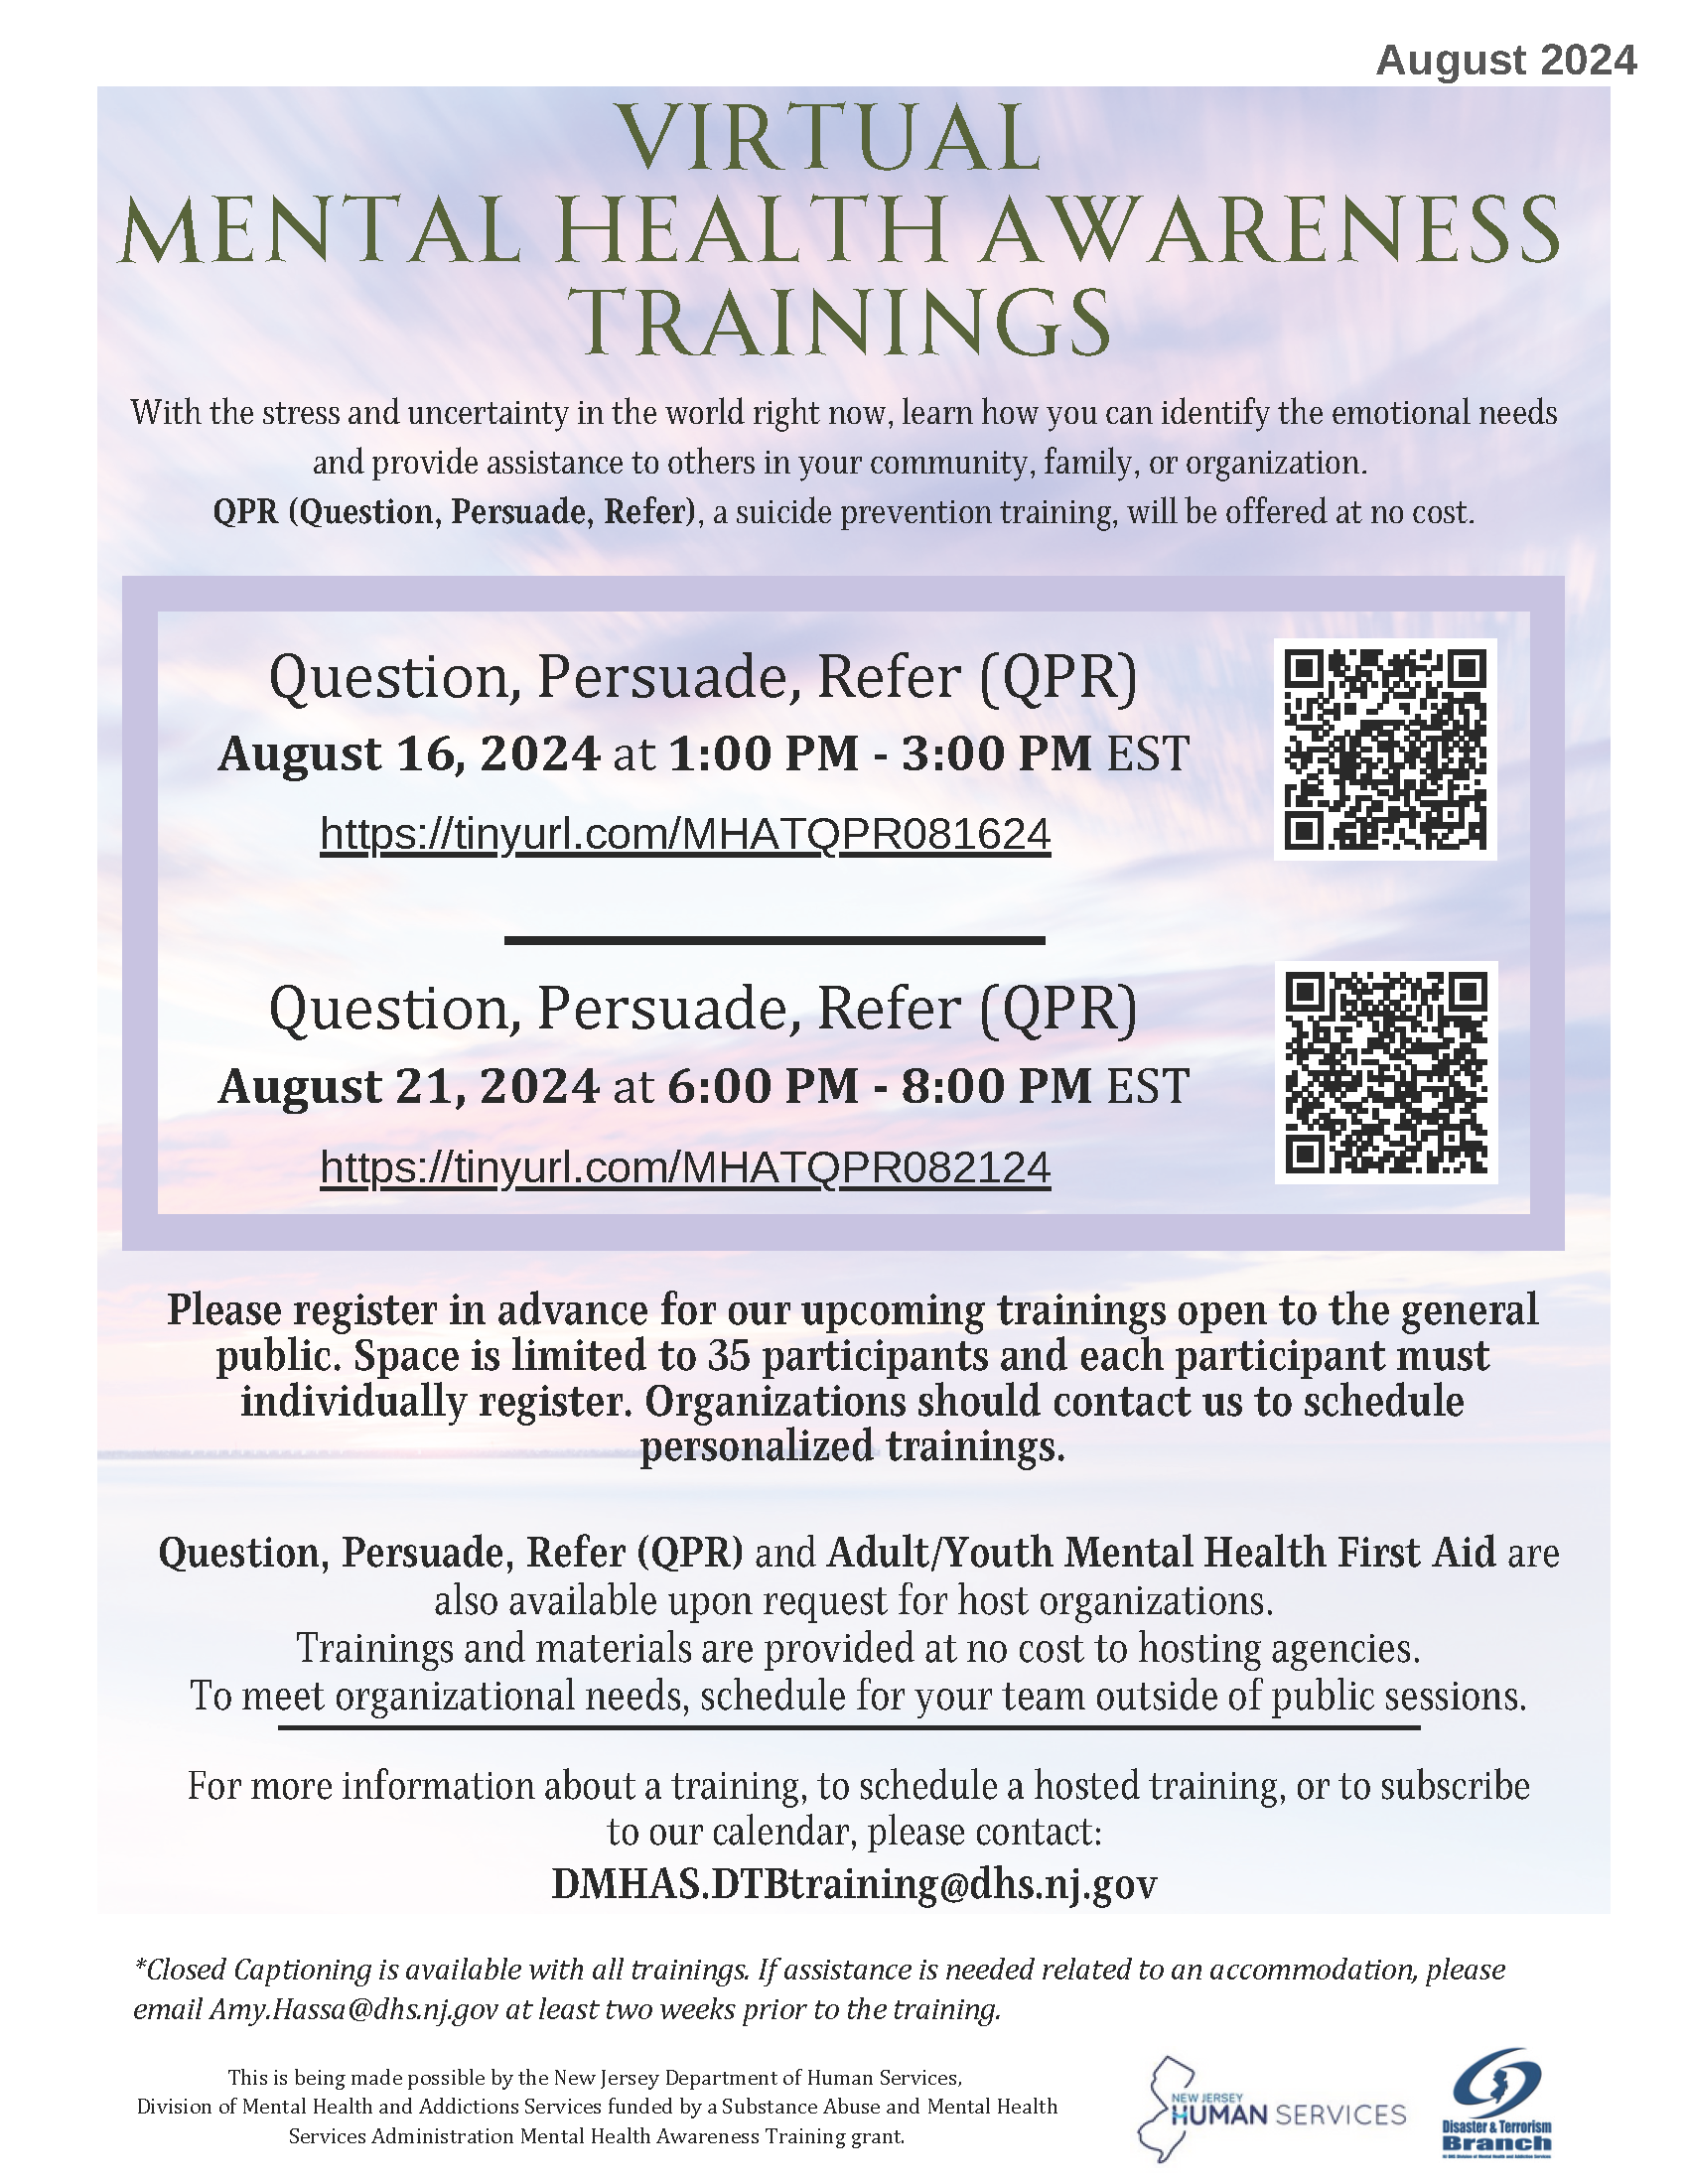 August 2024 Virtual Mental Health Awareness Training